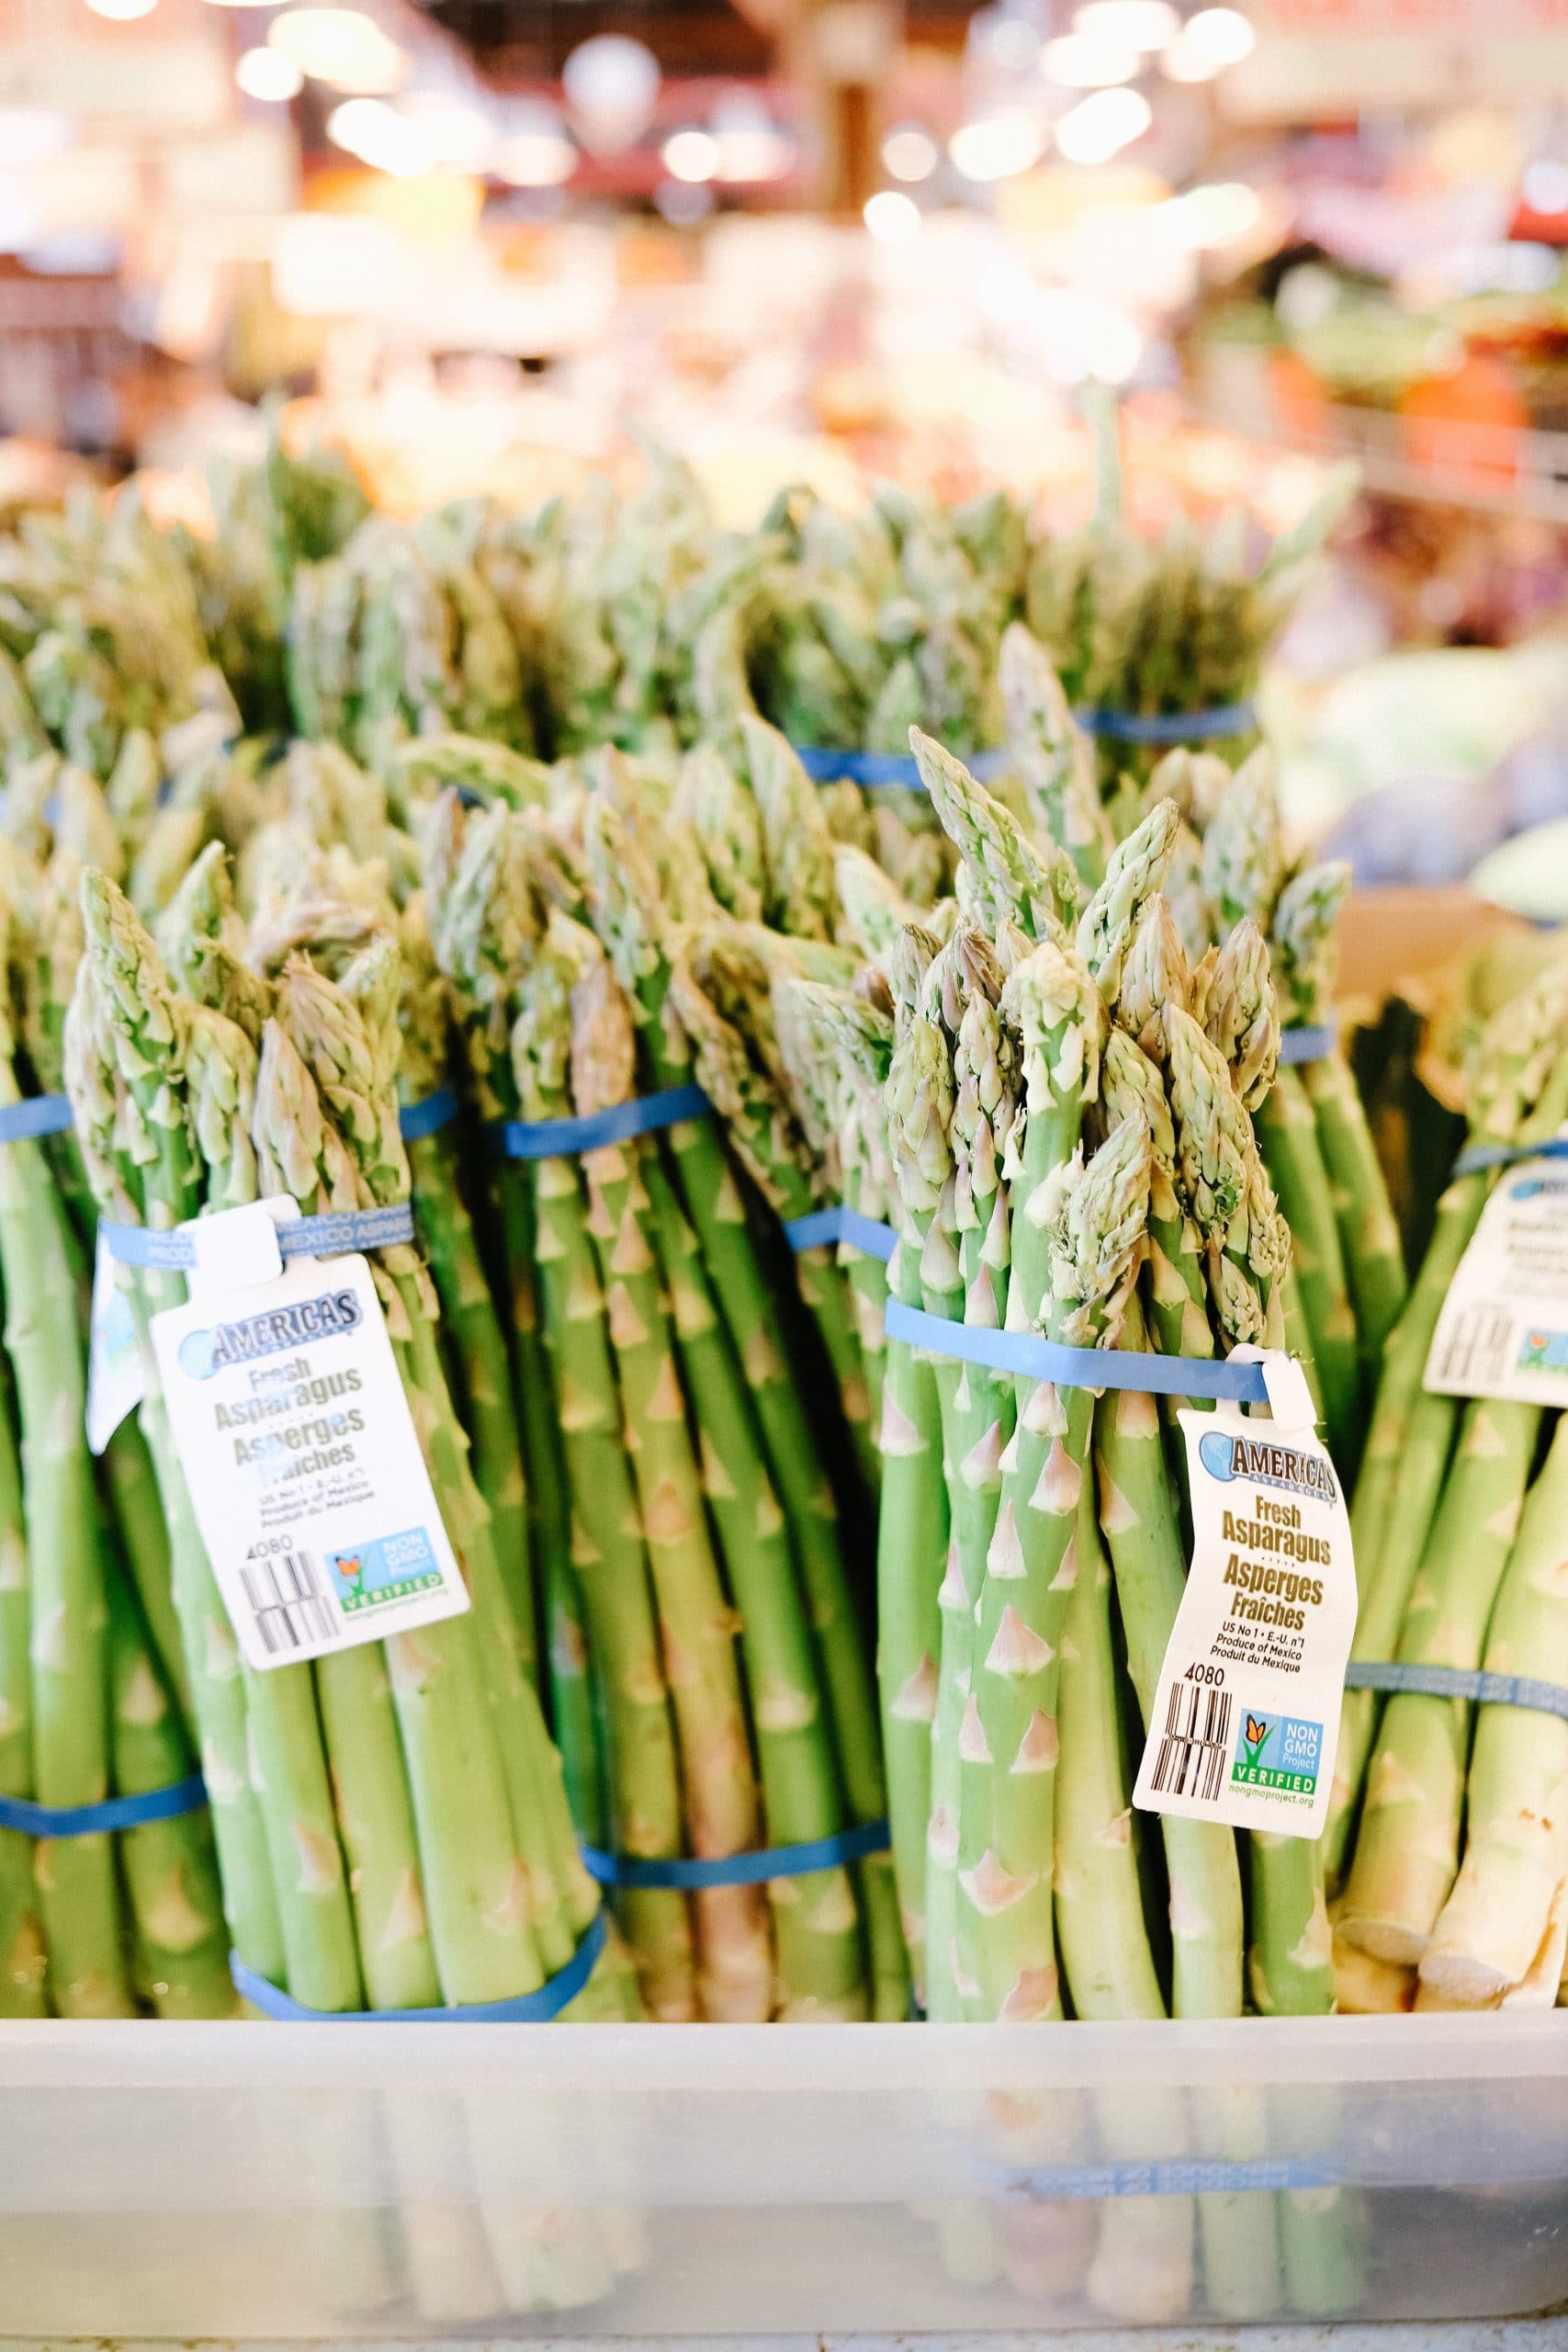 How long is asparagus good for